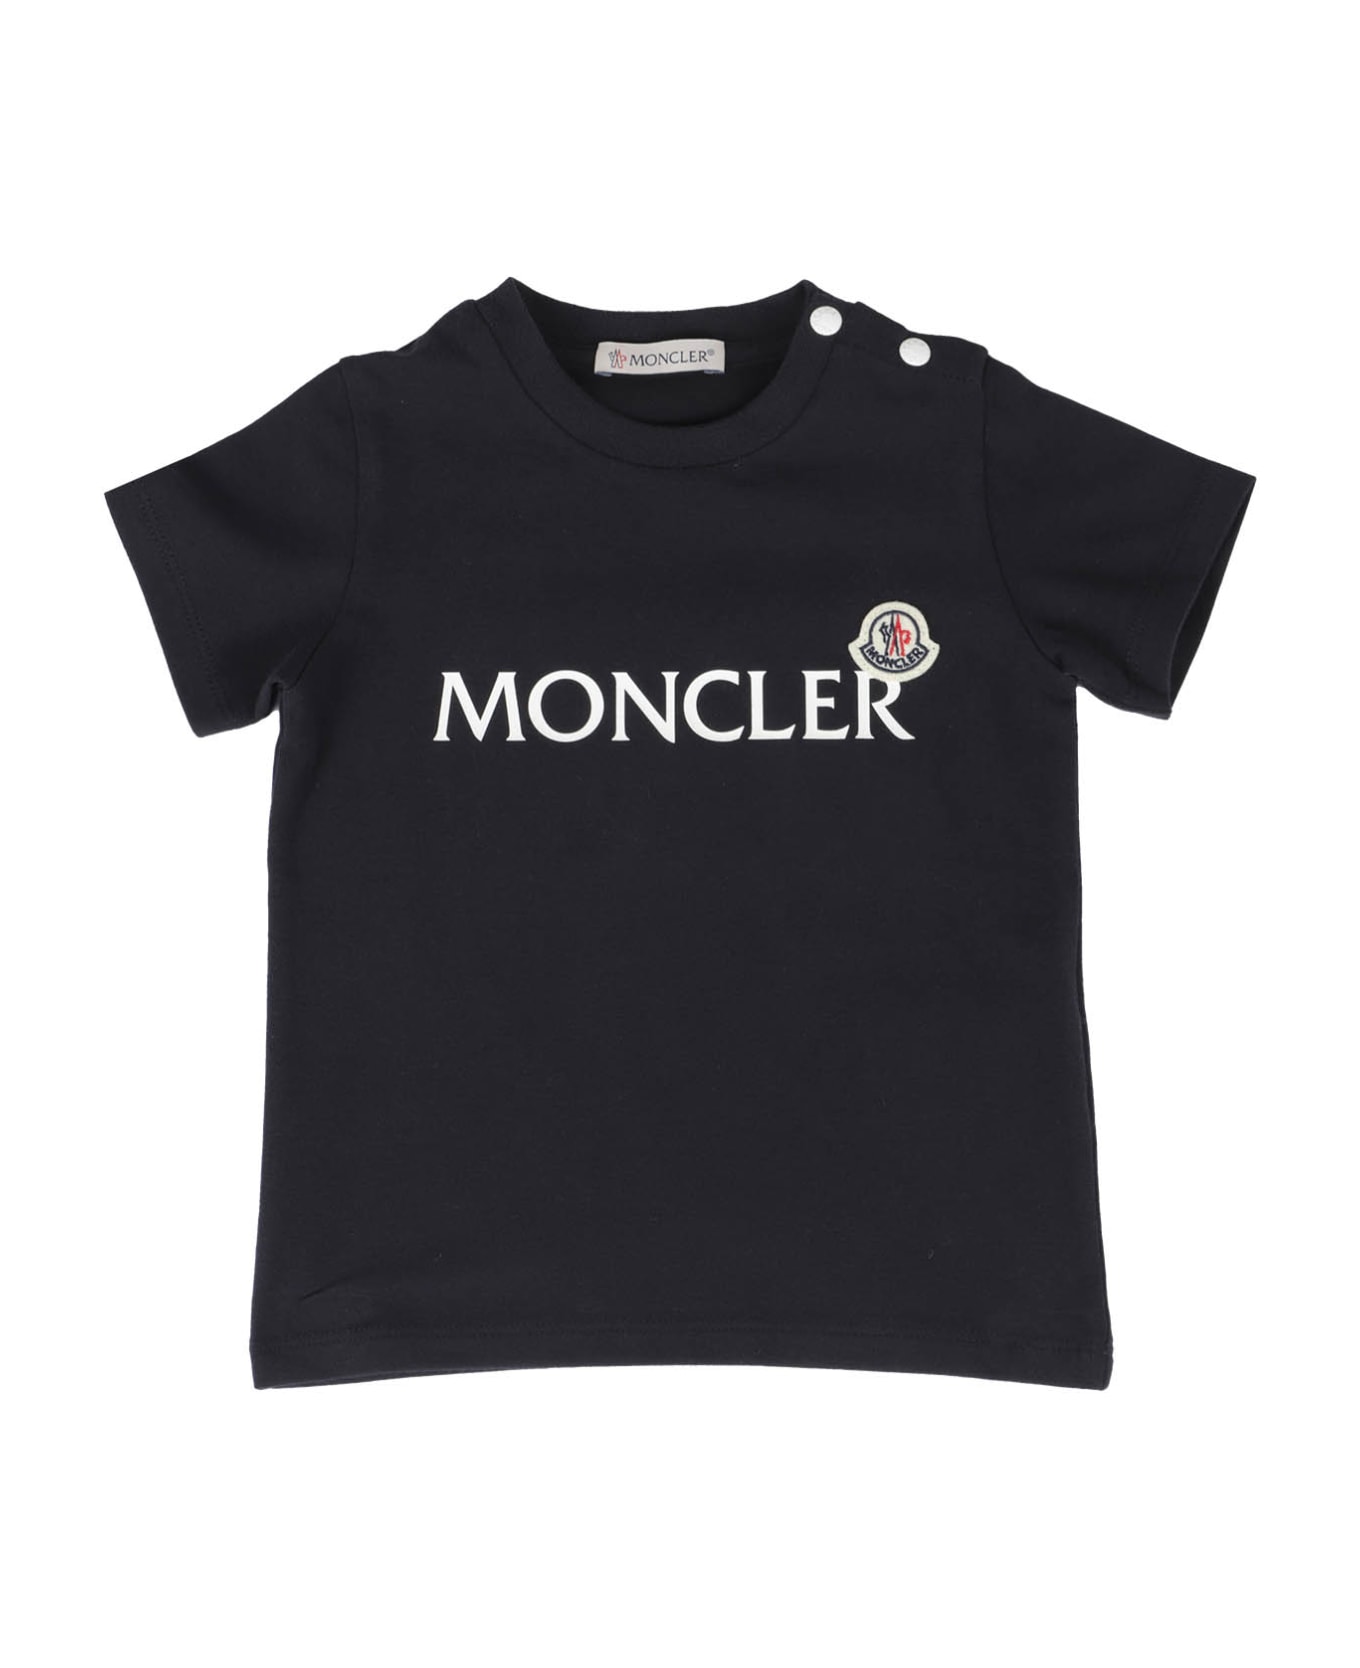 Moncler Tshirt - Navy